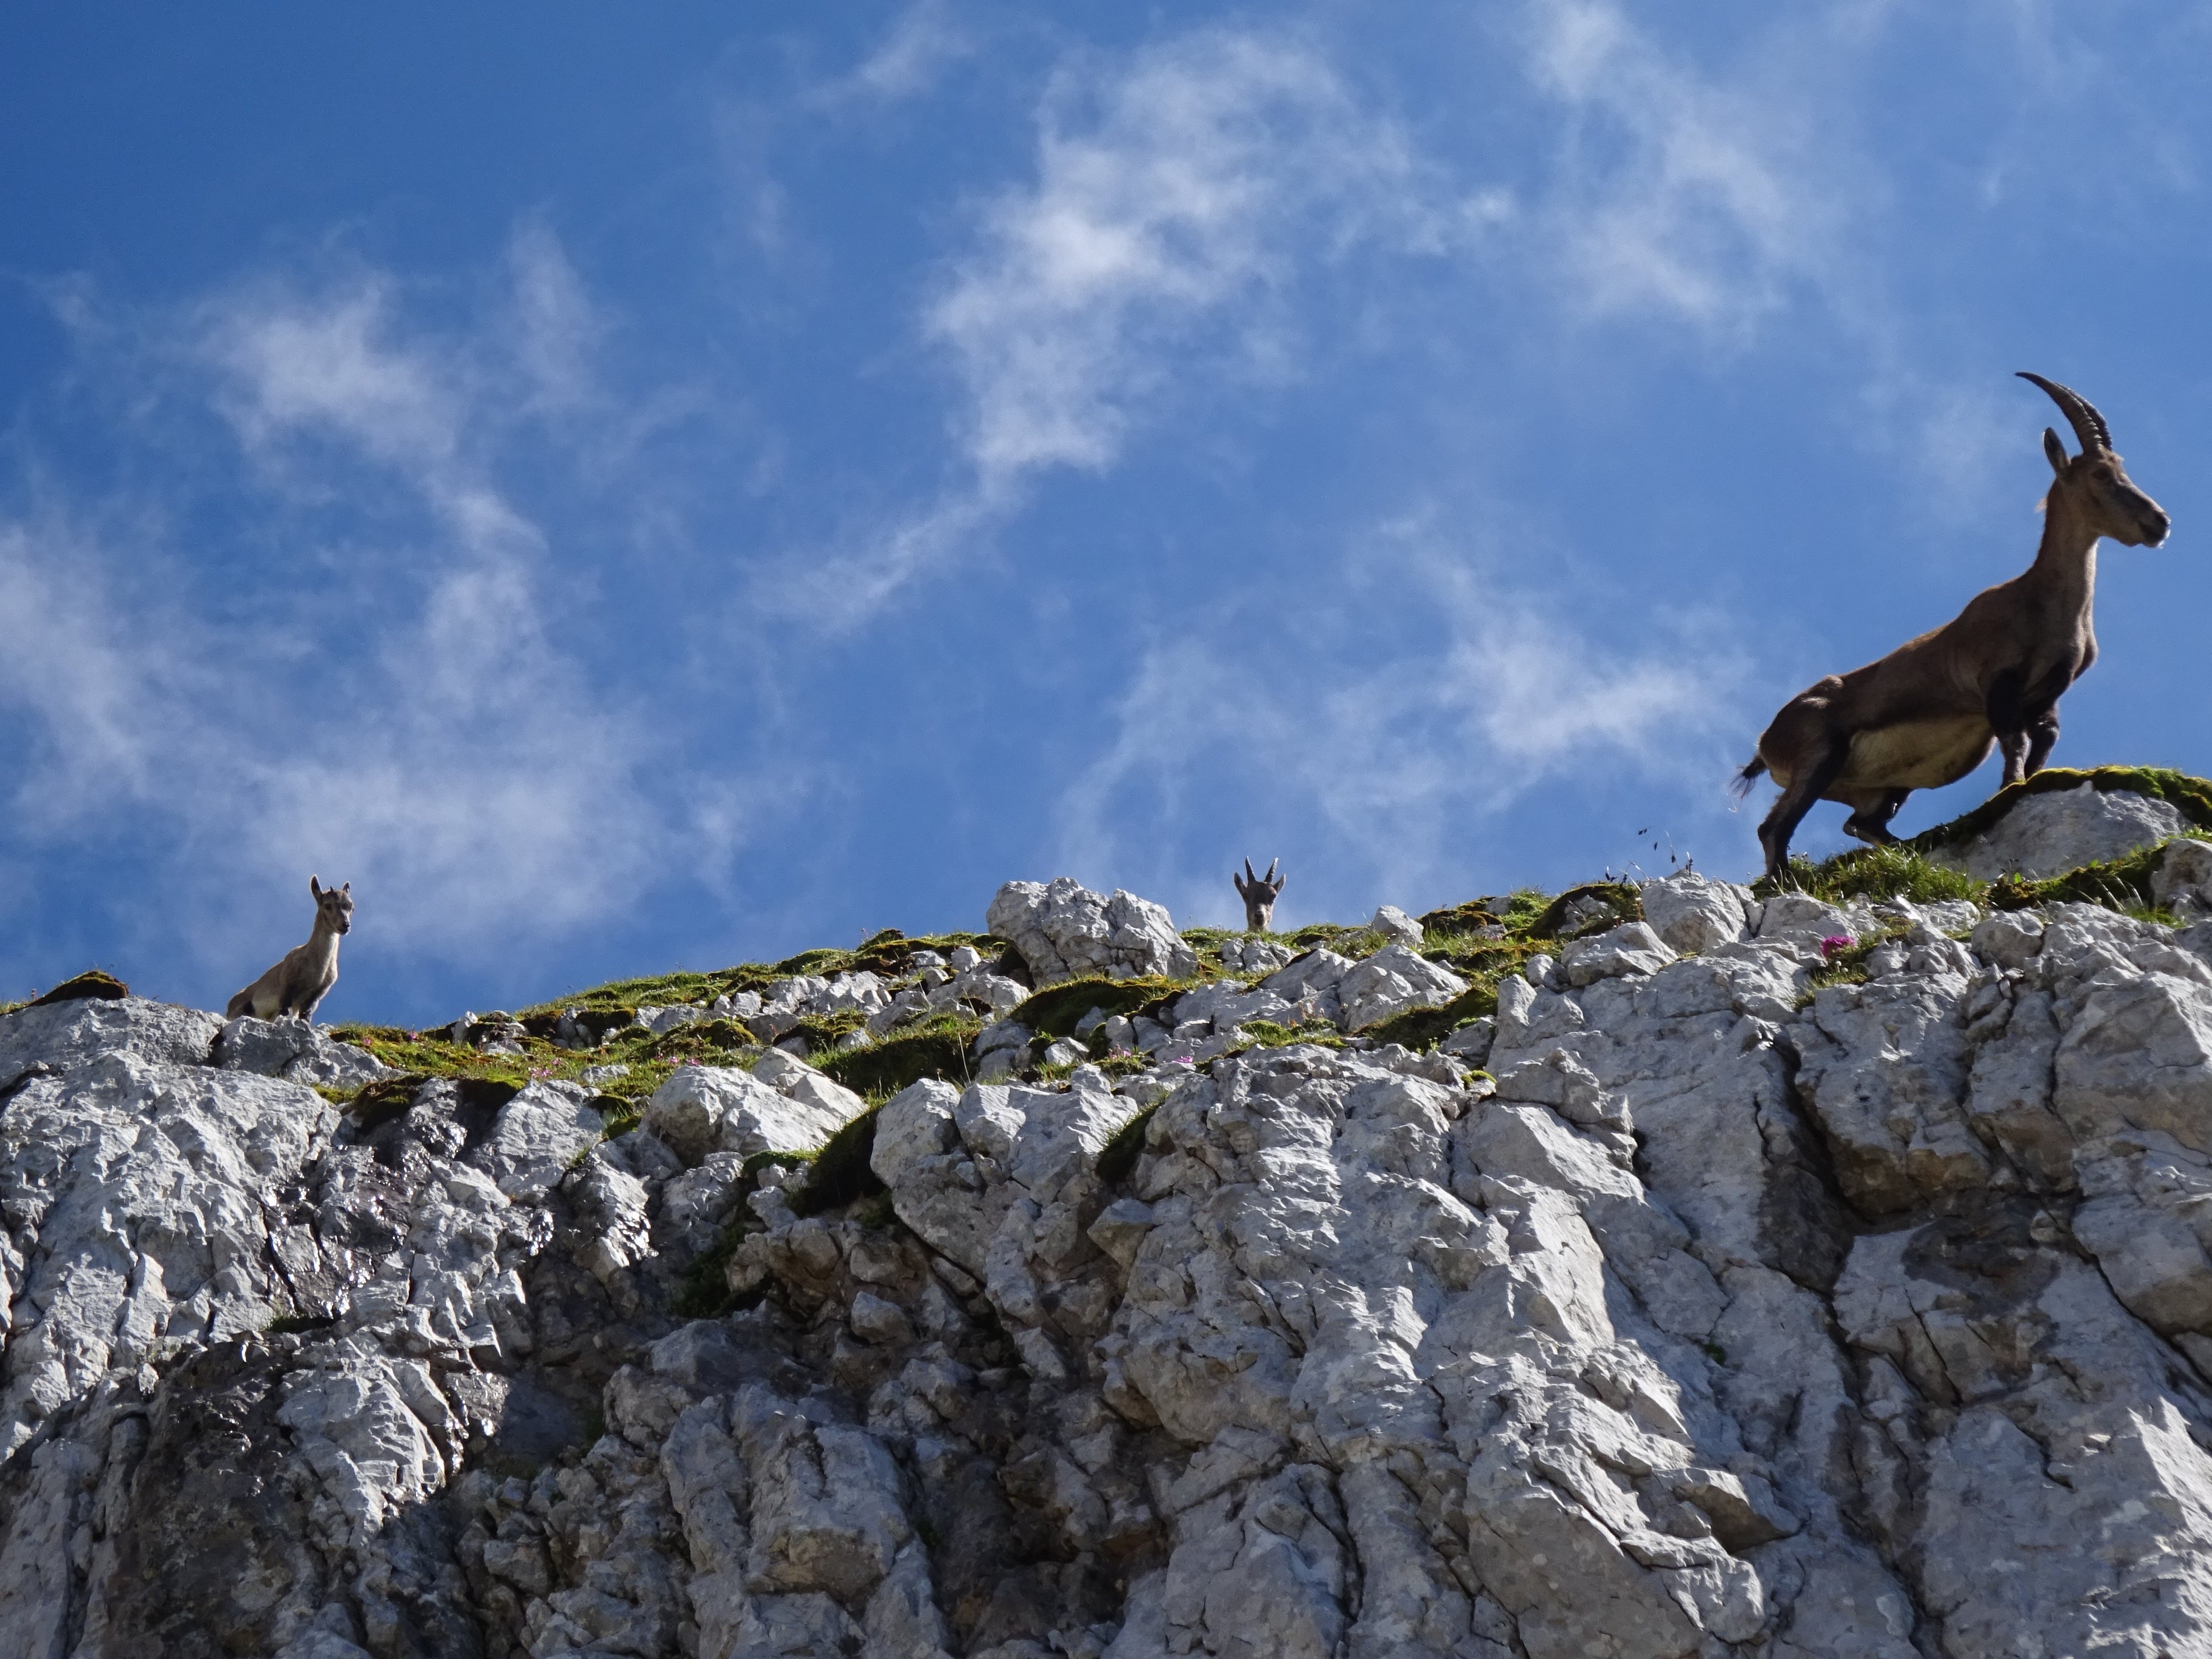 Kőszáli kecske (Capra ibex) (Rippl-Rónai Múzeum CC BY-NC-ND)